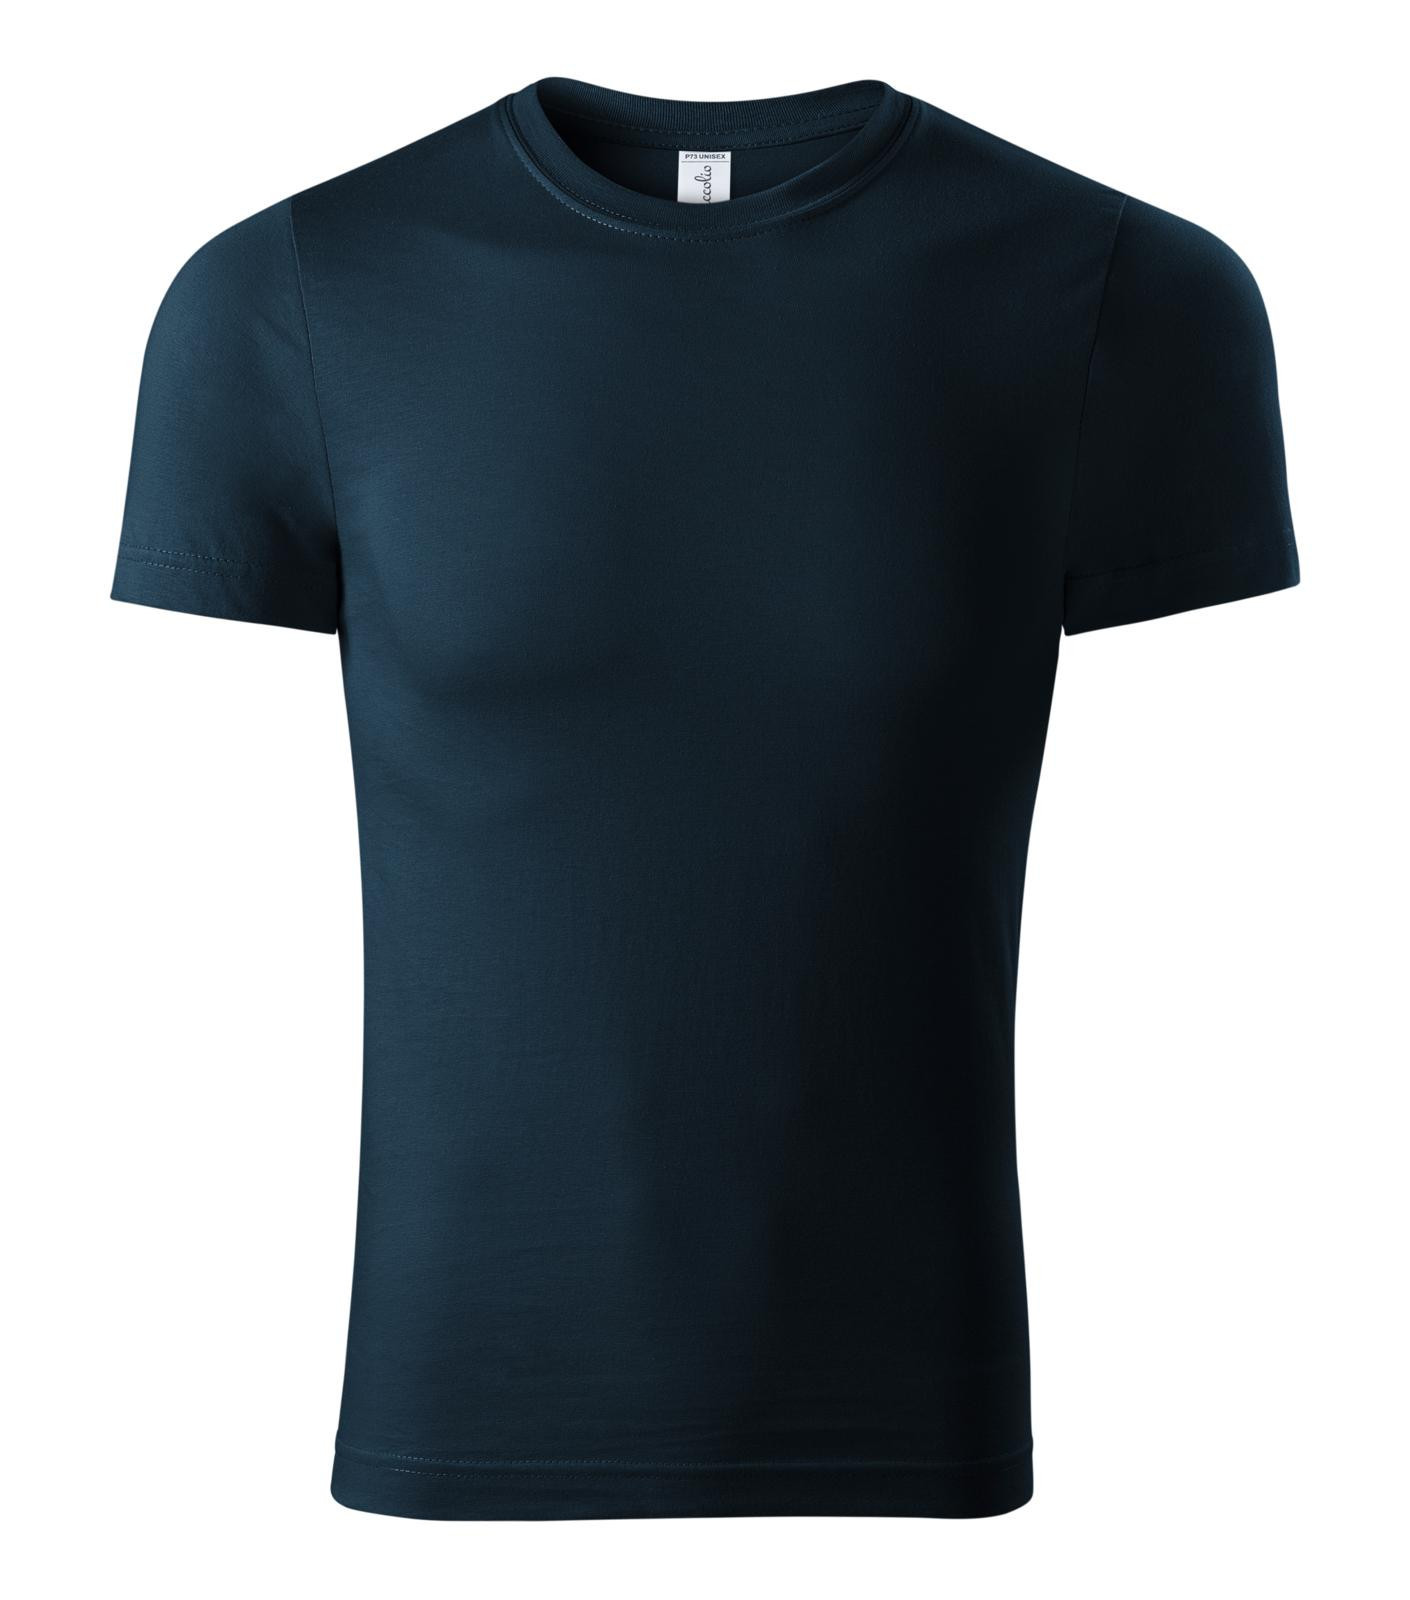 Unisex tričko Piccolio Paint P73 - veľkosť: XL, farba: tmavo modrá